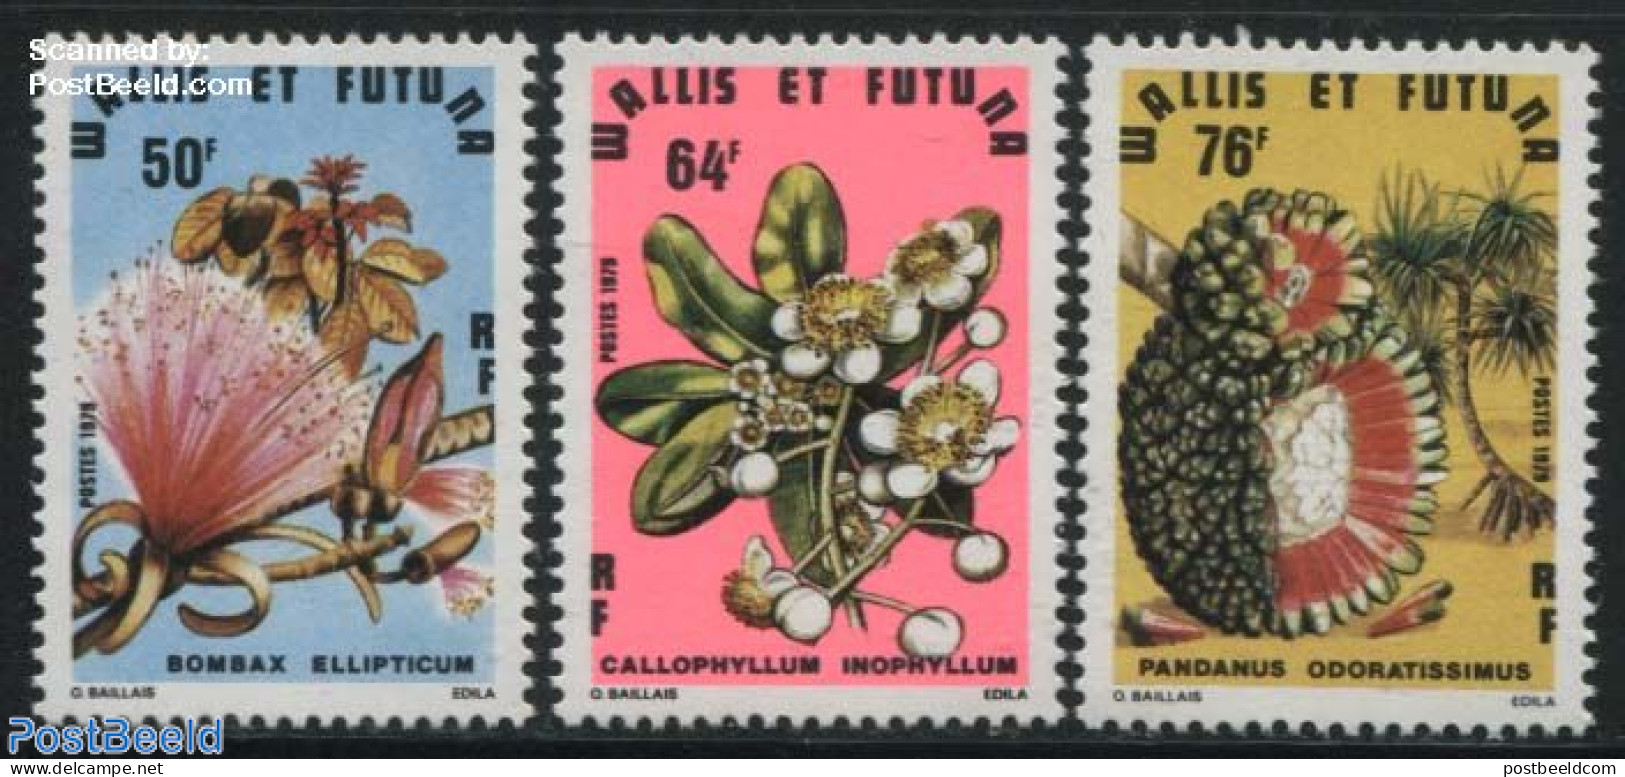 Wallis & Futuna 1979 Fruit And Flowers 3v, Mint NH, Nature - Flowers & Plants - Fruit - Fruit